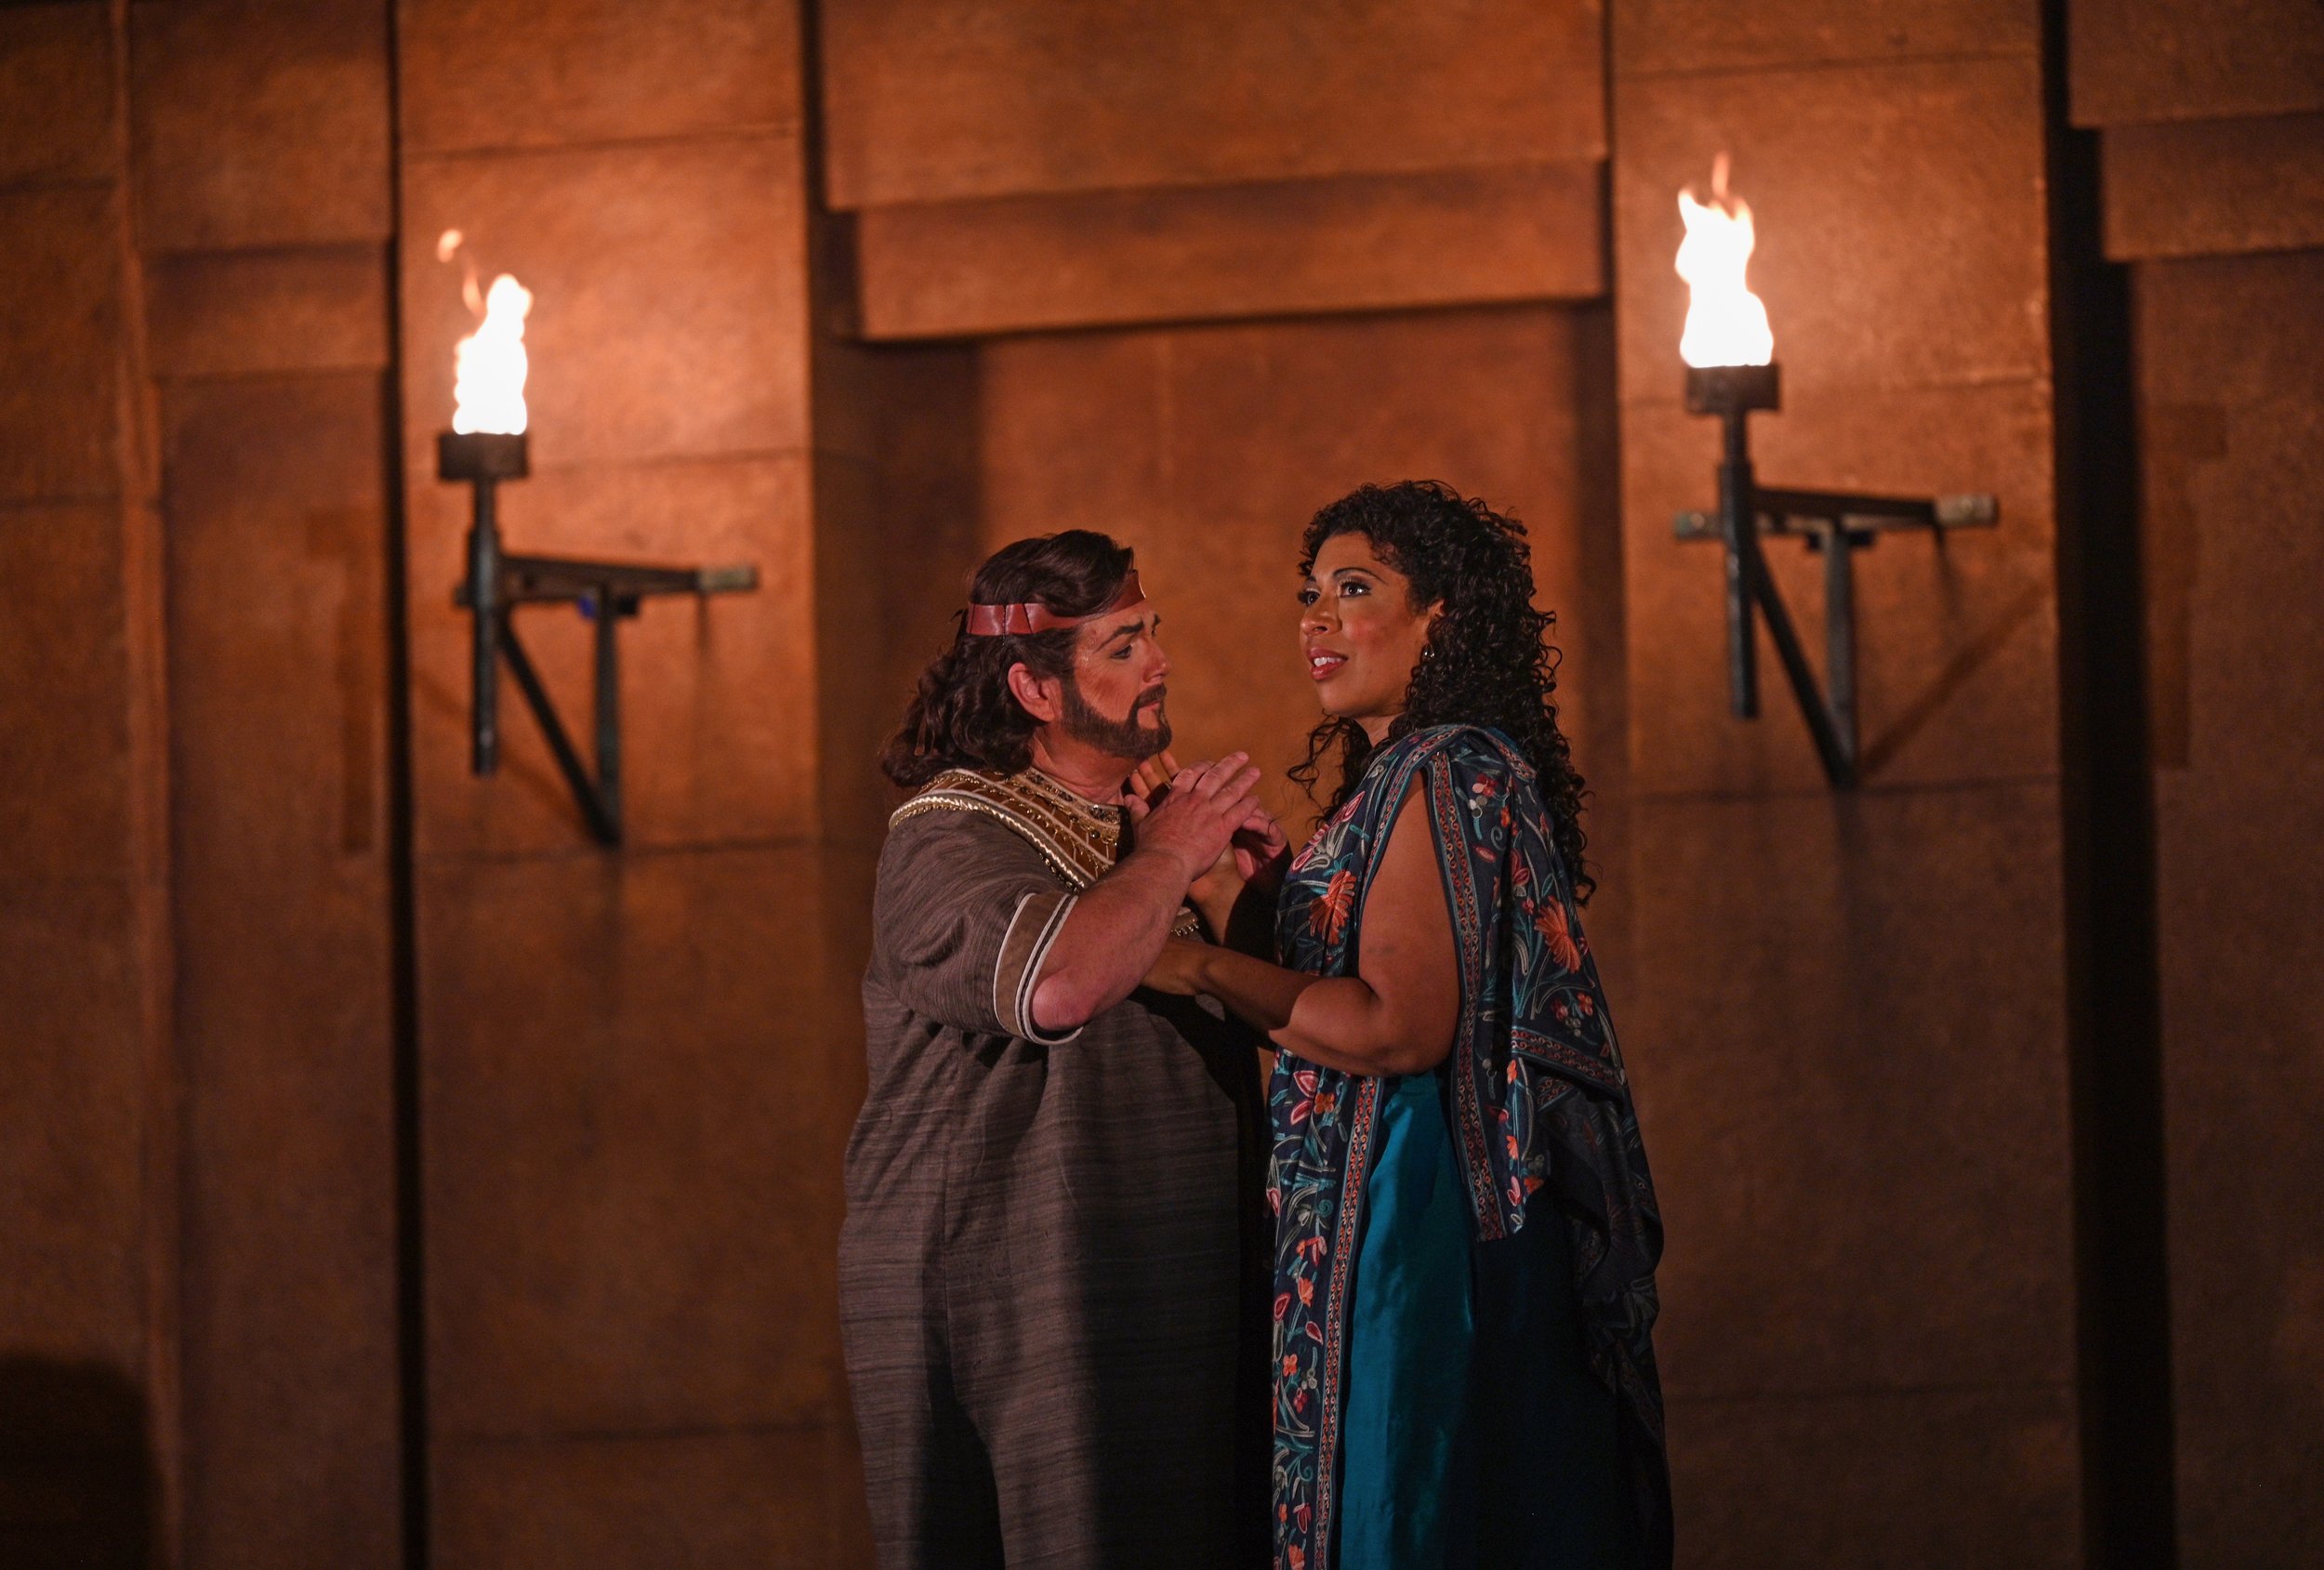  Gregory Kunde as Radamès, Mary Elizabeth Williams as Aida. Photo by Philip Groshong. 